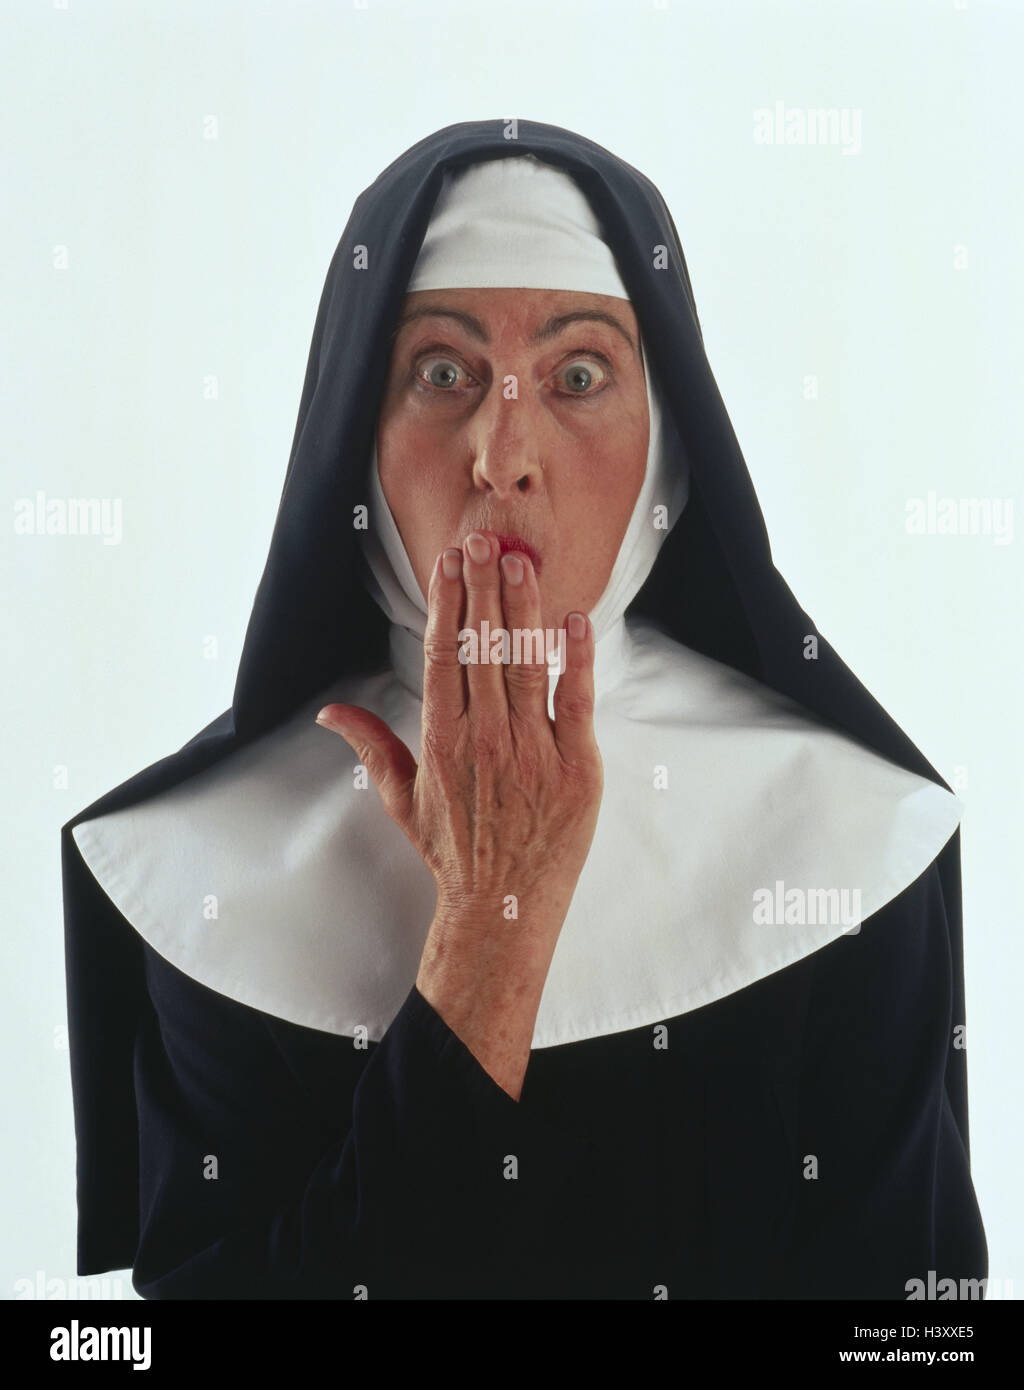 Benedictine, nun, habit, gesture, astonishment, fright, half portrait, professions, studio, cut out, woman, habit, is surprised, surprises, surprise, startled, Stock Photo